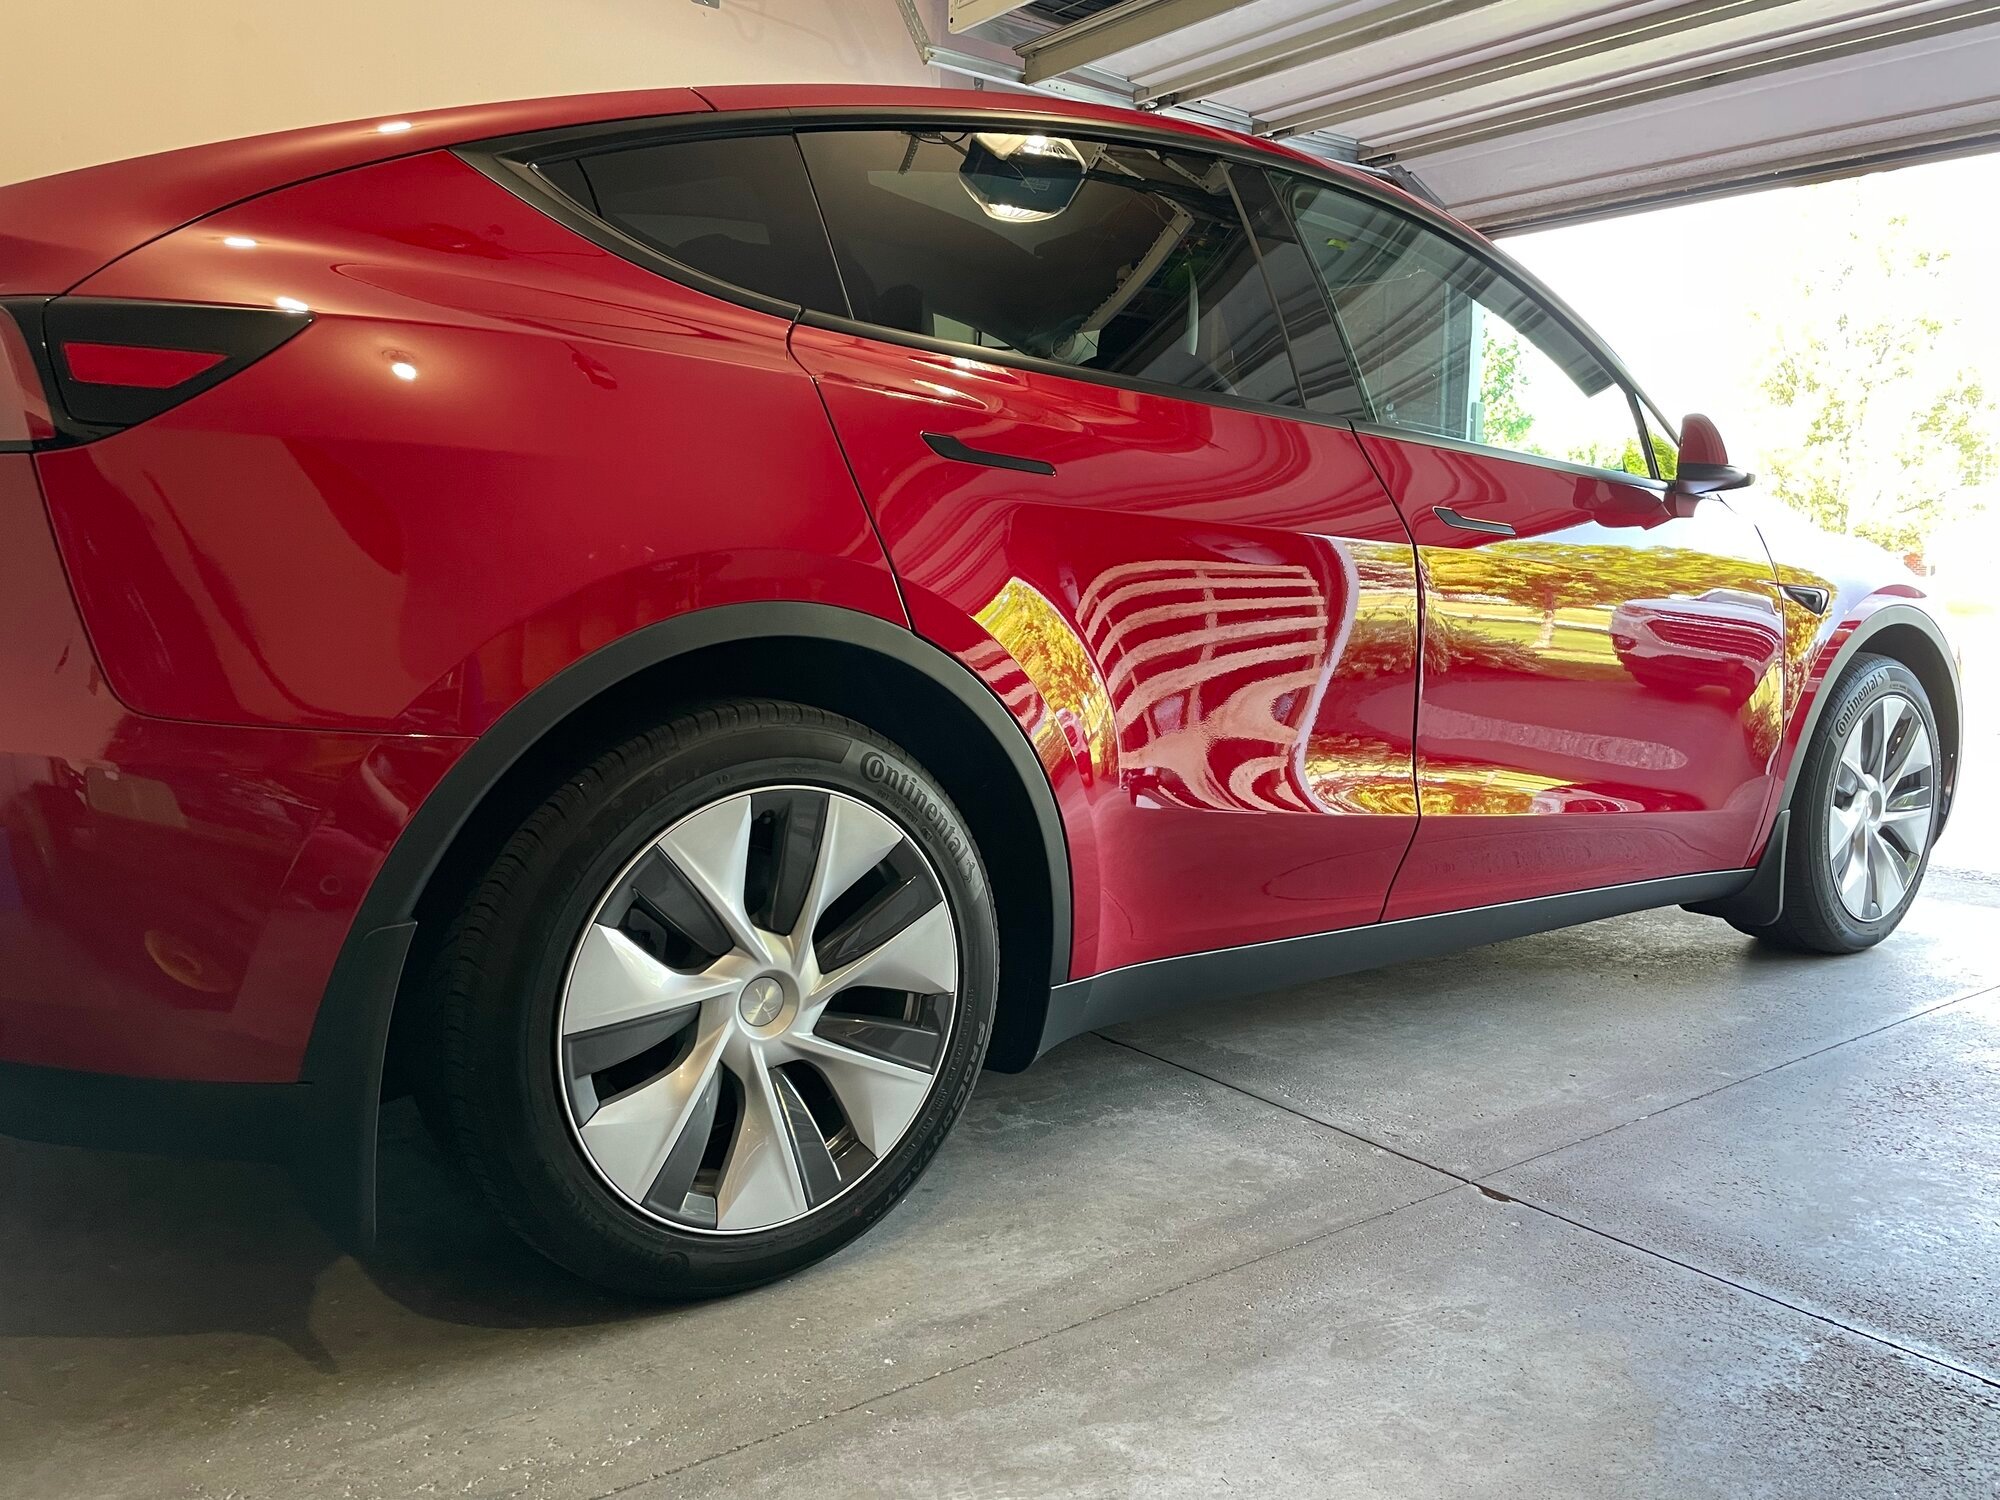 Car Rear Door Sill Protector for Tesla Model Y 2022 2023 Rear Seat  Anti-Dirty Mat Anti Kick Pad Model Y Car Accessories Accessory